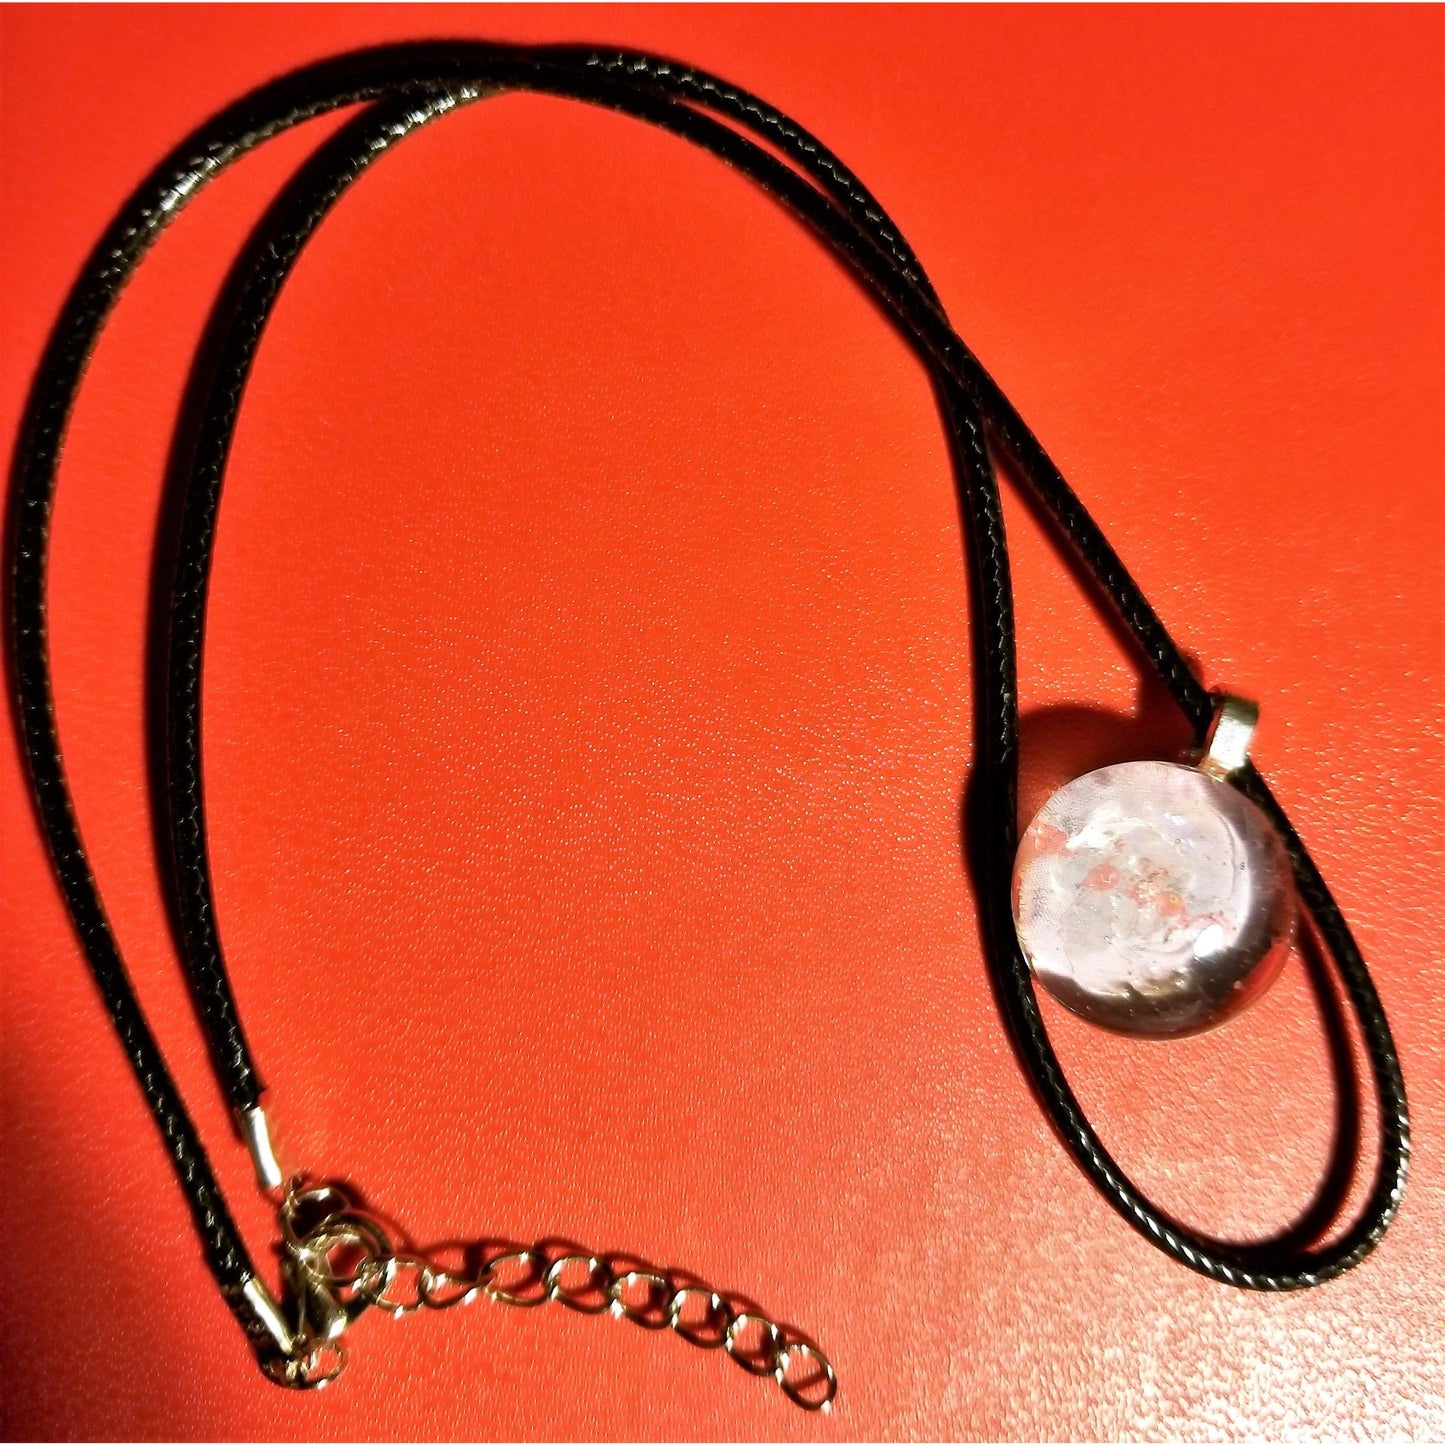 Pink Flamingo Hope Good Luck Etc. Handmade Good Flat Back Glass Marble Necklace 💋